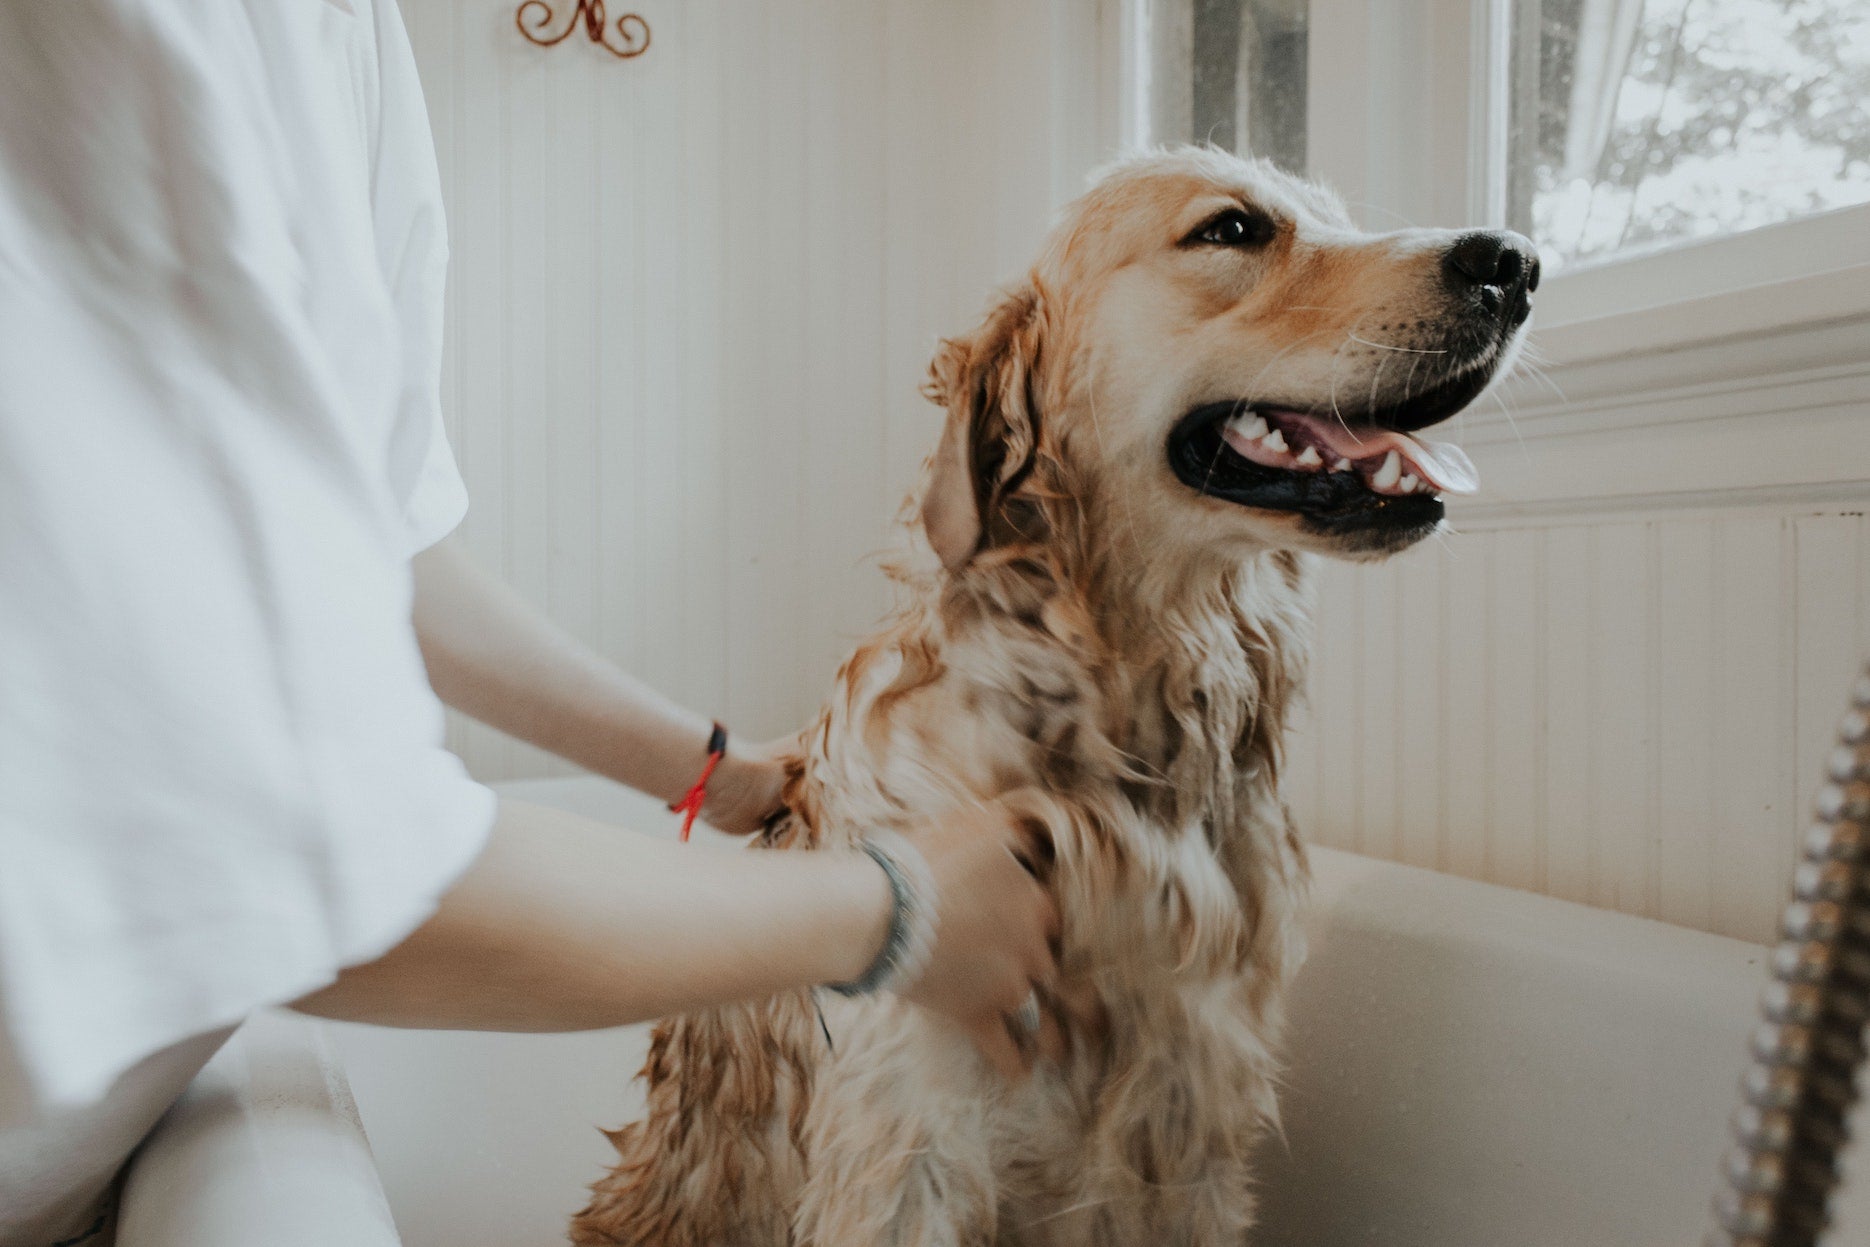 Person washes a golden retriever dog in a bathtub